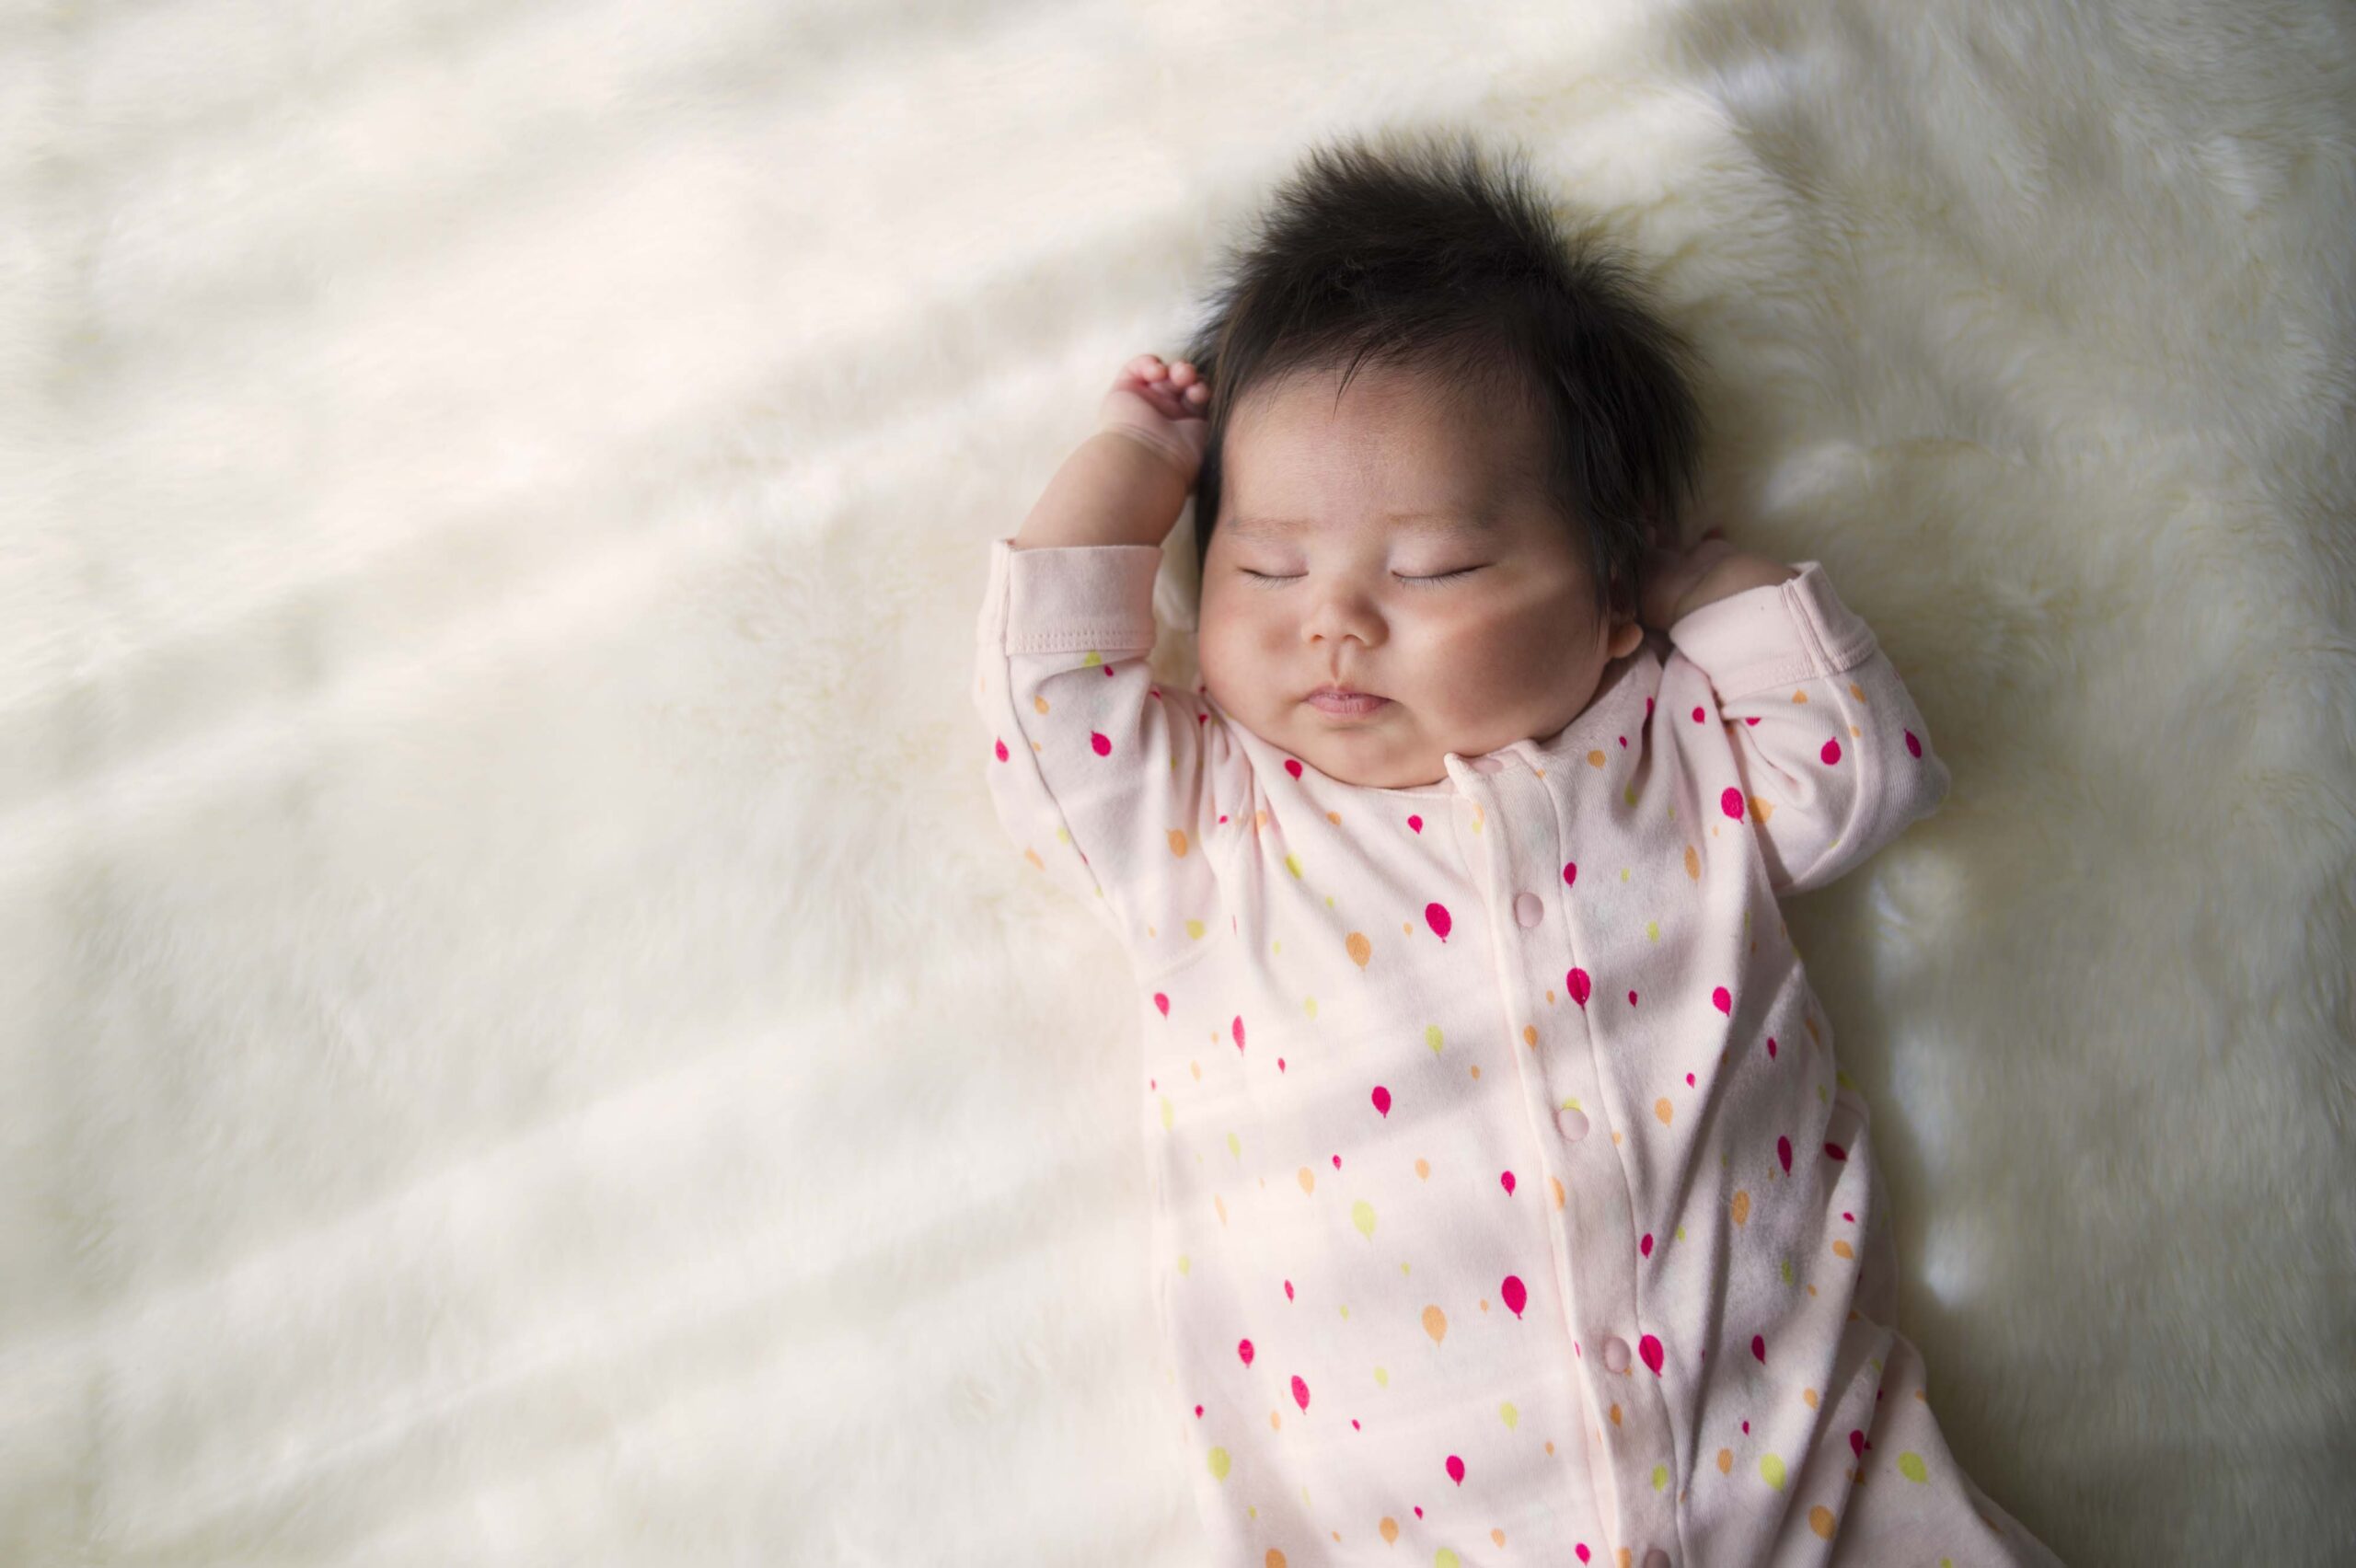 Best ways to avoid diaper rash in infants?